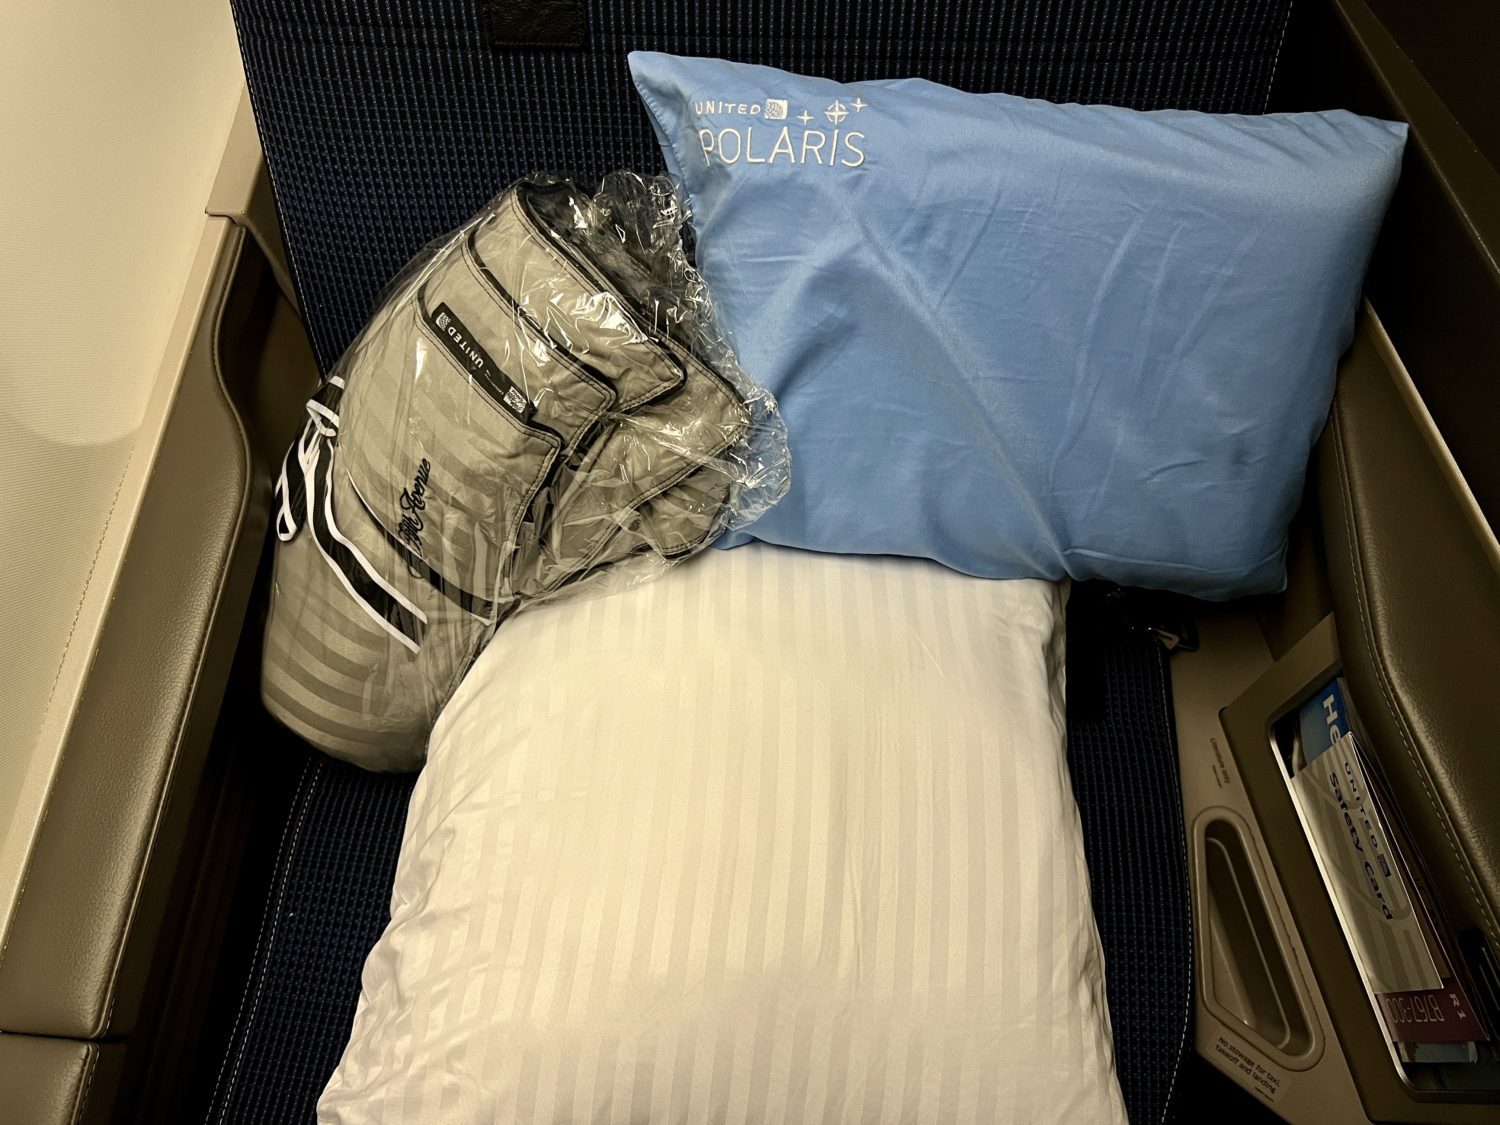 united polaris bedding  United Polaris Business Class Review on the 767-300ER &#8211; Thrifty Traveler united polaris bedding scaled